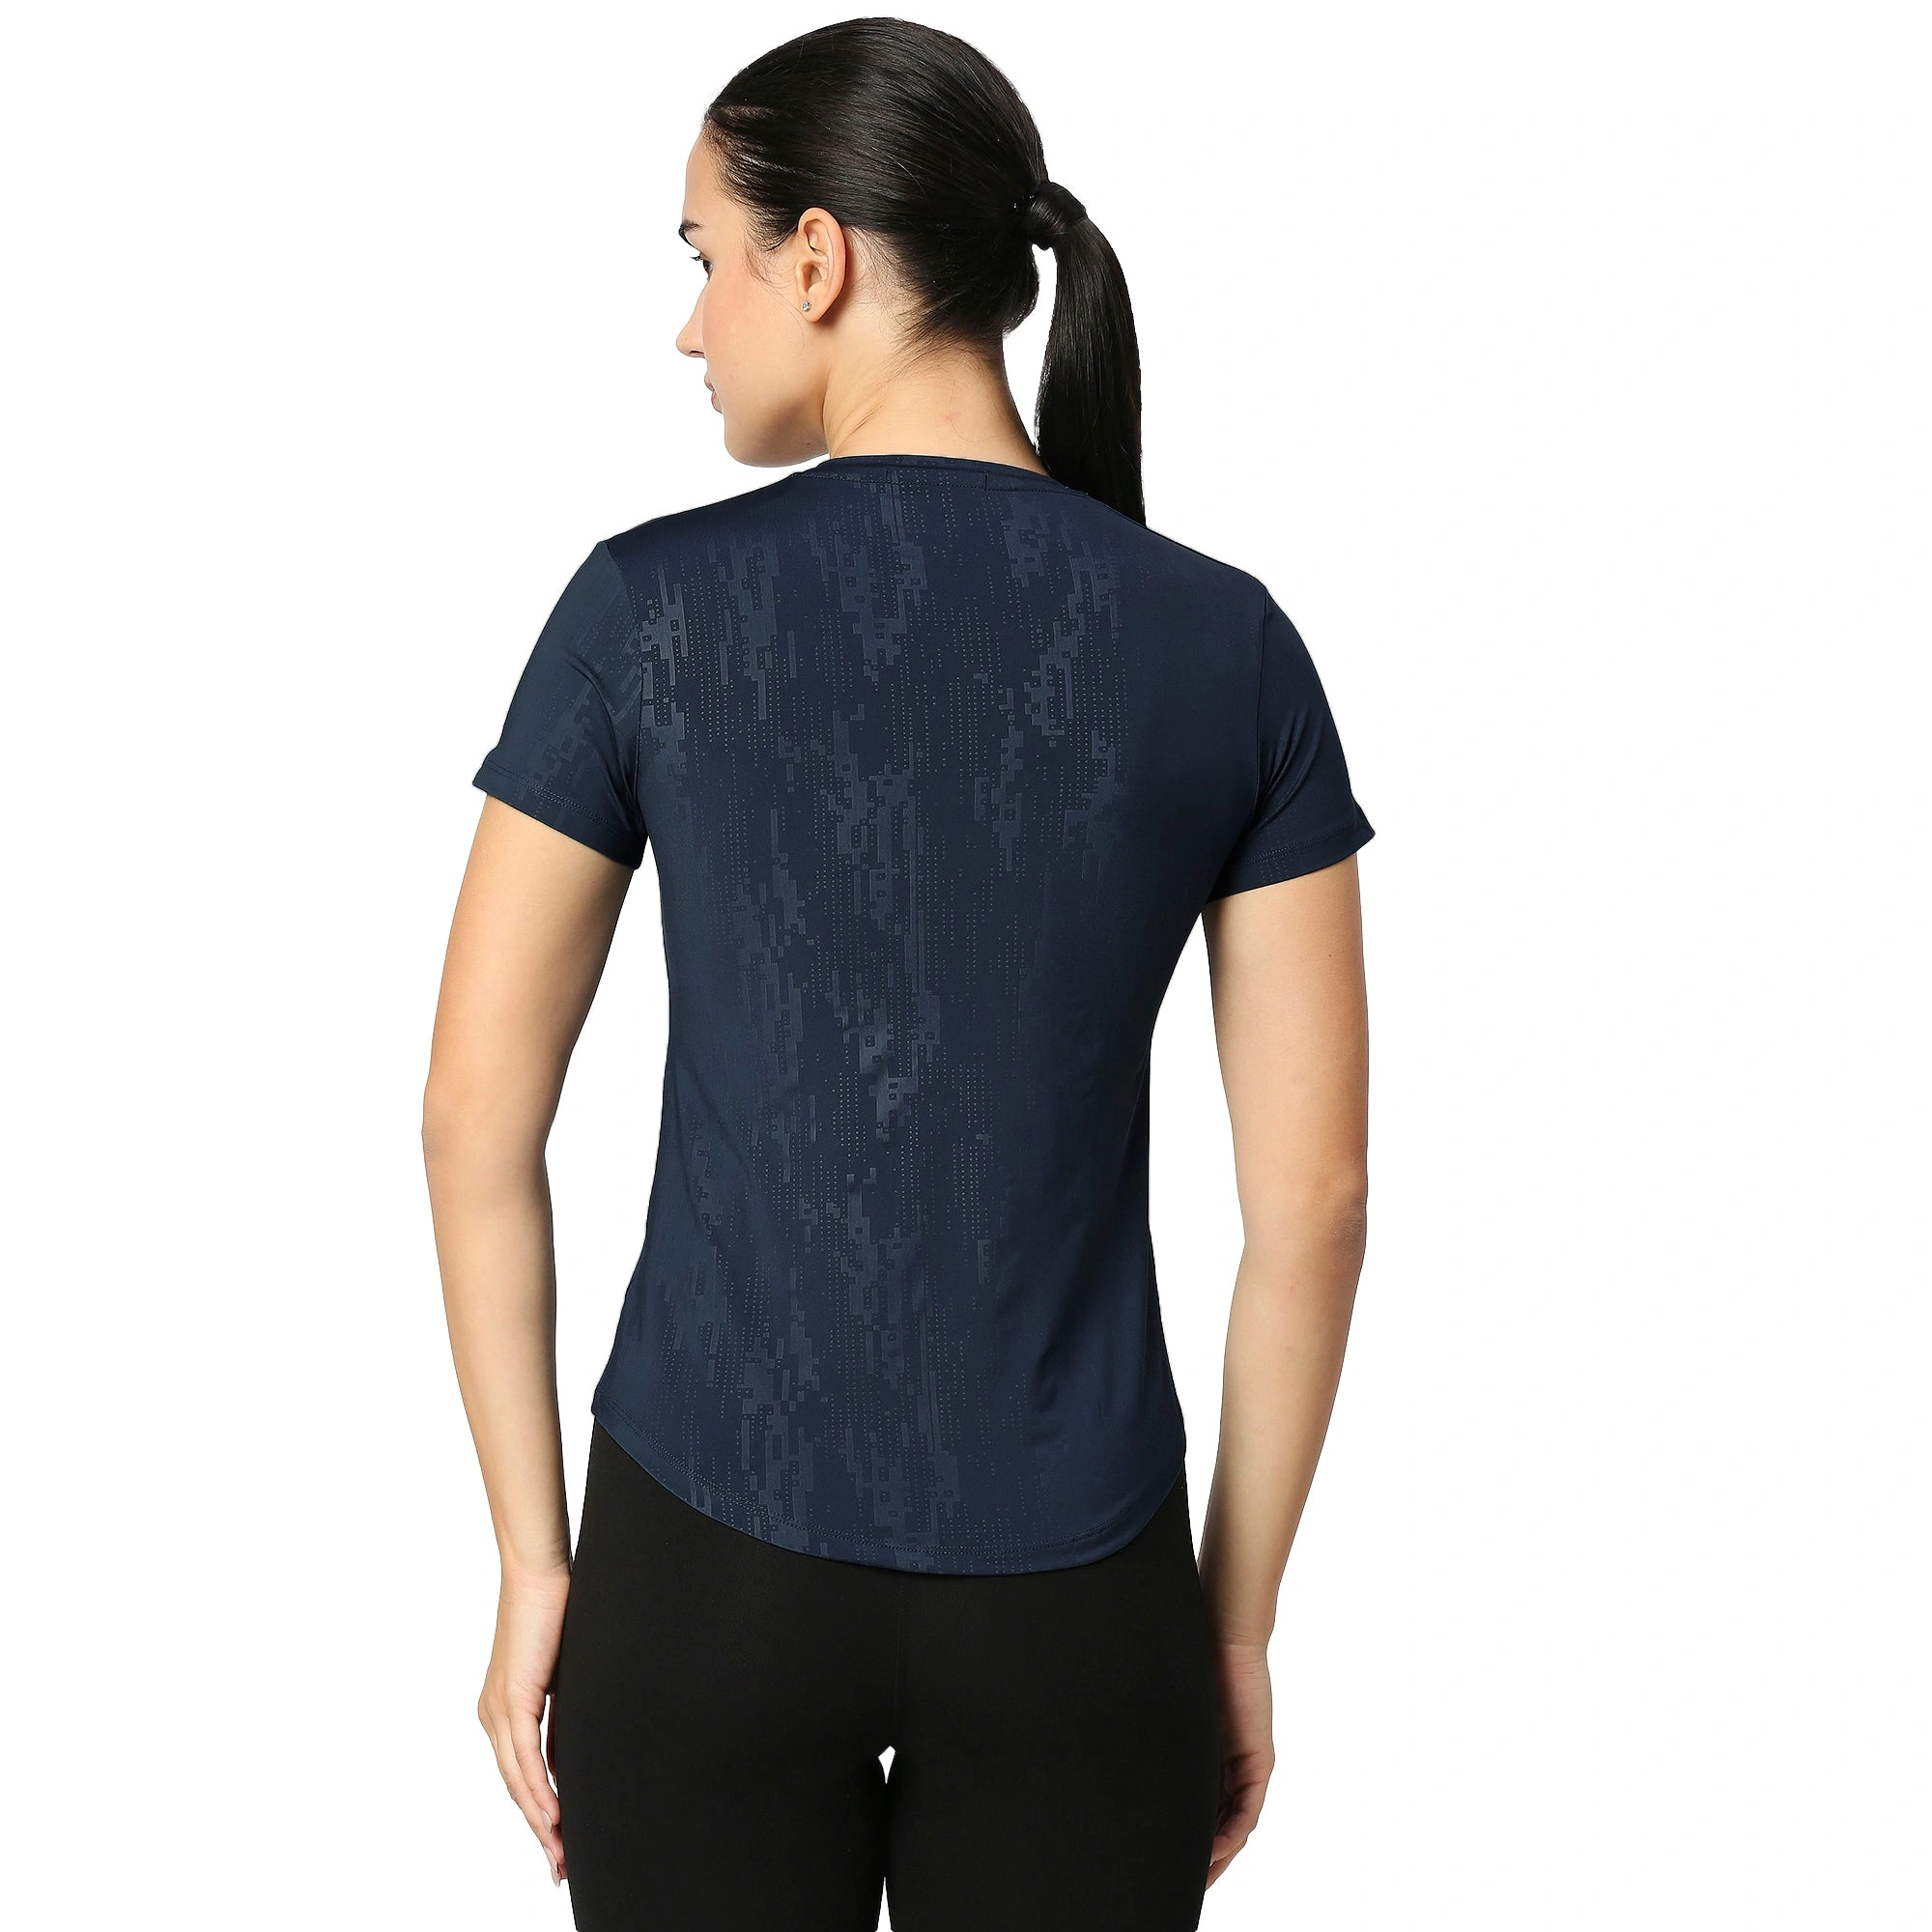 Curved Hem Emboss Print Gym Workout T-Shirt -NAVY BLUE-L-3